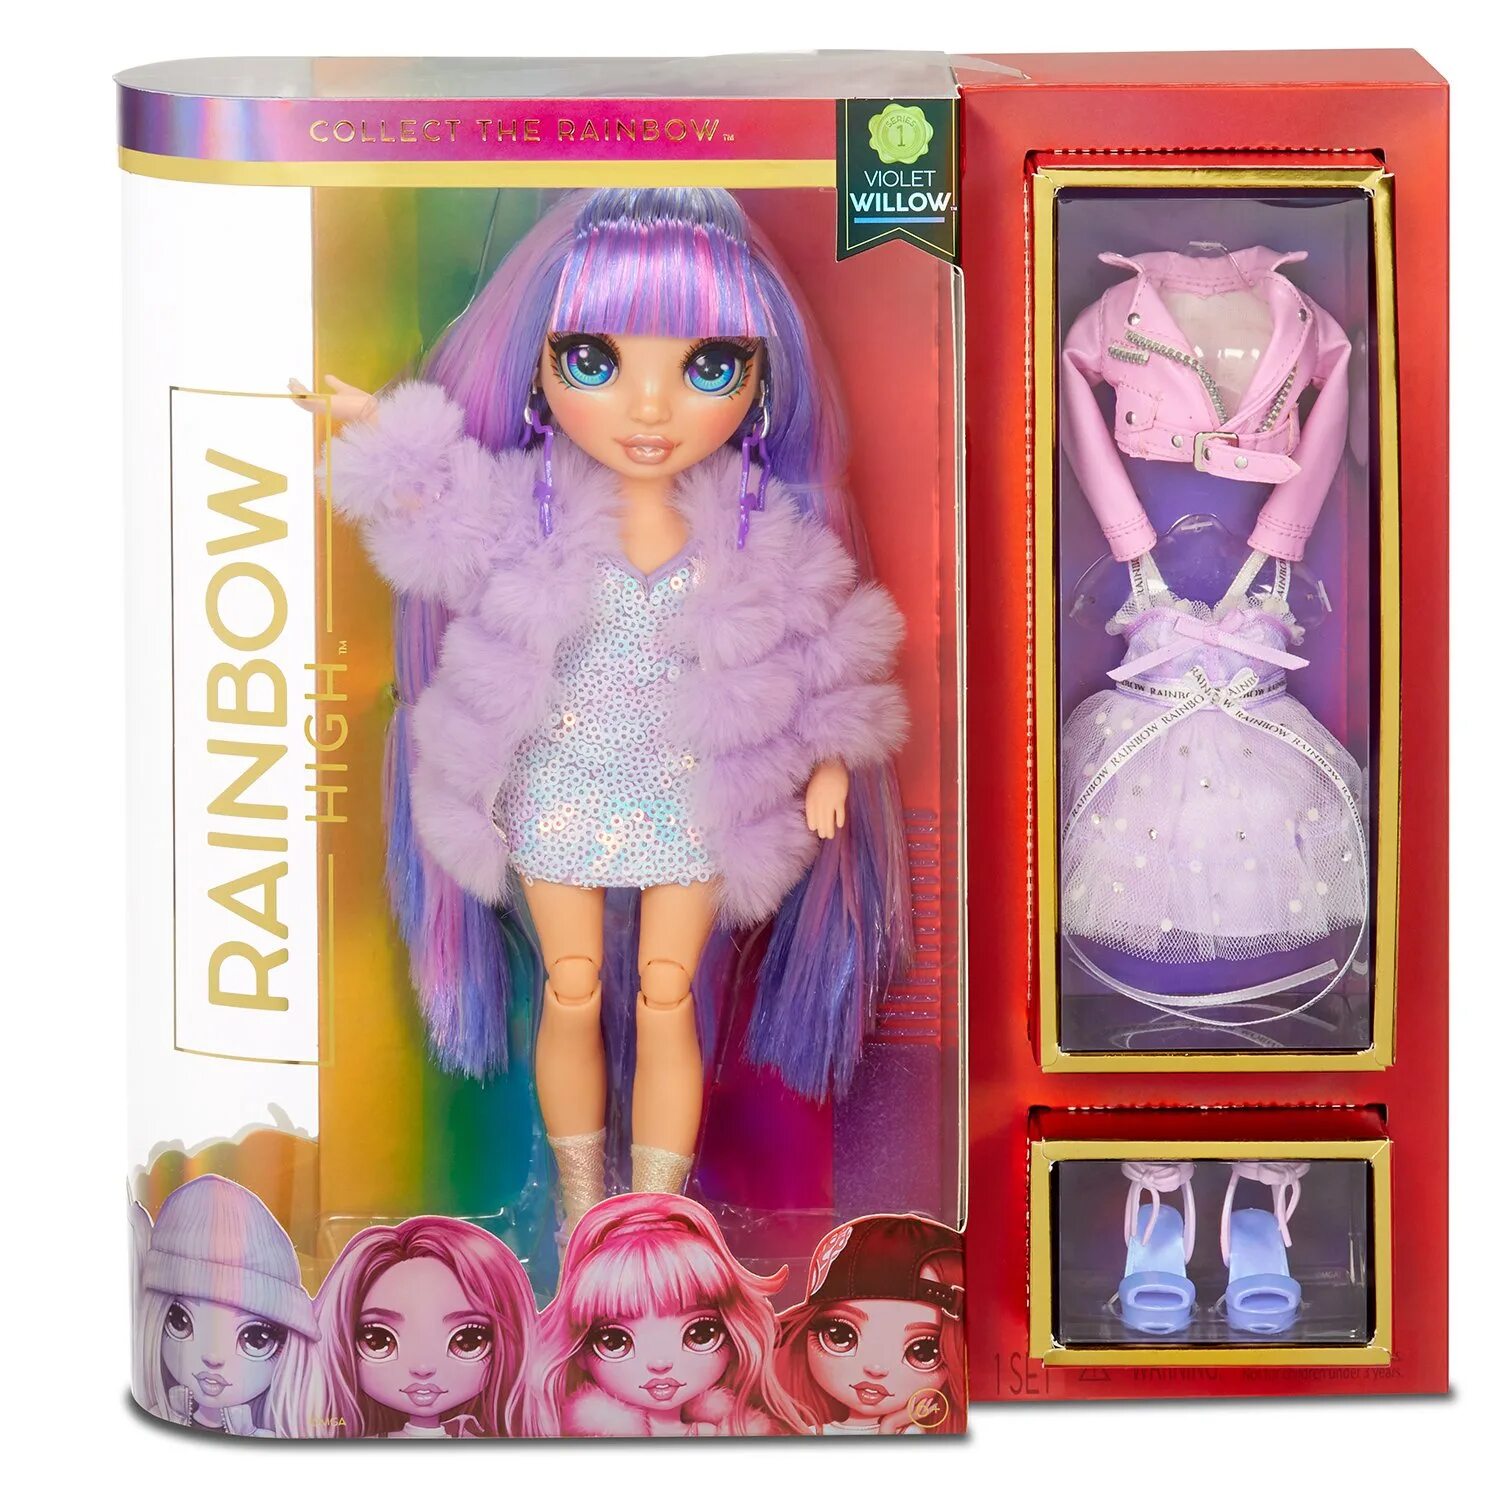 Кукла rainbow high fashion. Кукла Rainbow High Violet Willow. Кукла Surprise Rainbow High Вайолет Виллоу. Кукла Rainbow High Violet Willow, 28 см 569602. Rainbow High 569602 кукла Violet Willows.